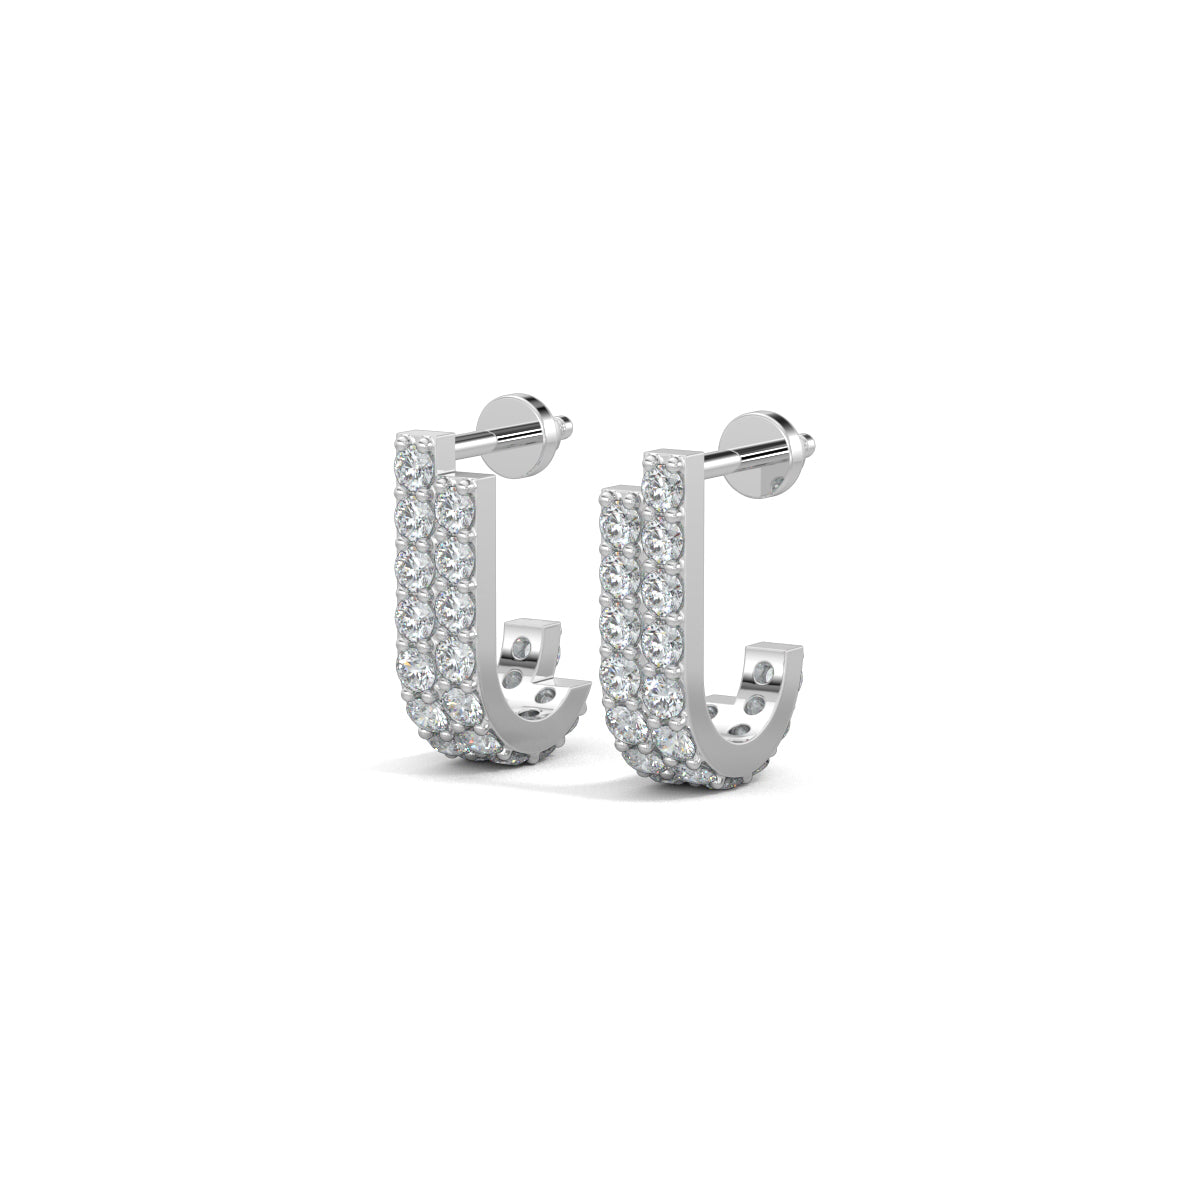 White Gold, Diamond Earrings, LunaDazzle Earrings, Half-bali diamond earrings, Natural Diamonds, Lab-grown diamonds, Pave diamond earrings, Luxury diamond jewelry, Contemporary diamond earrings